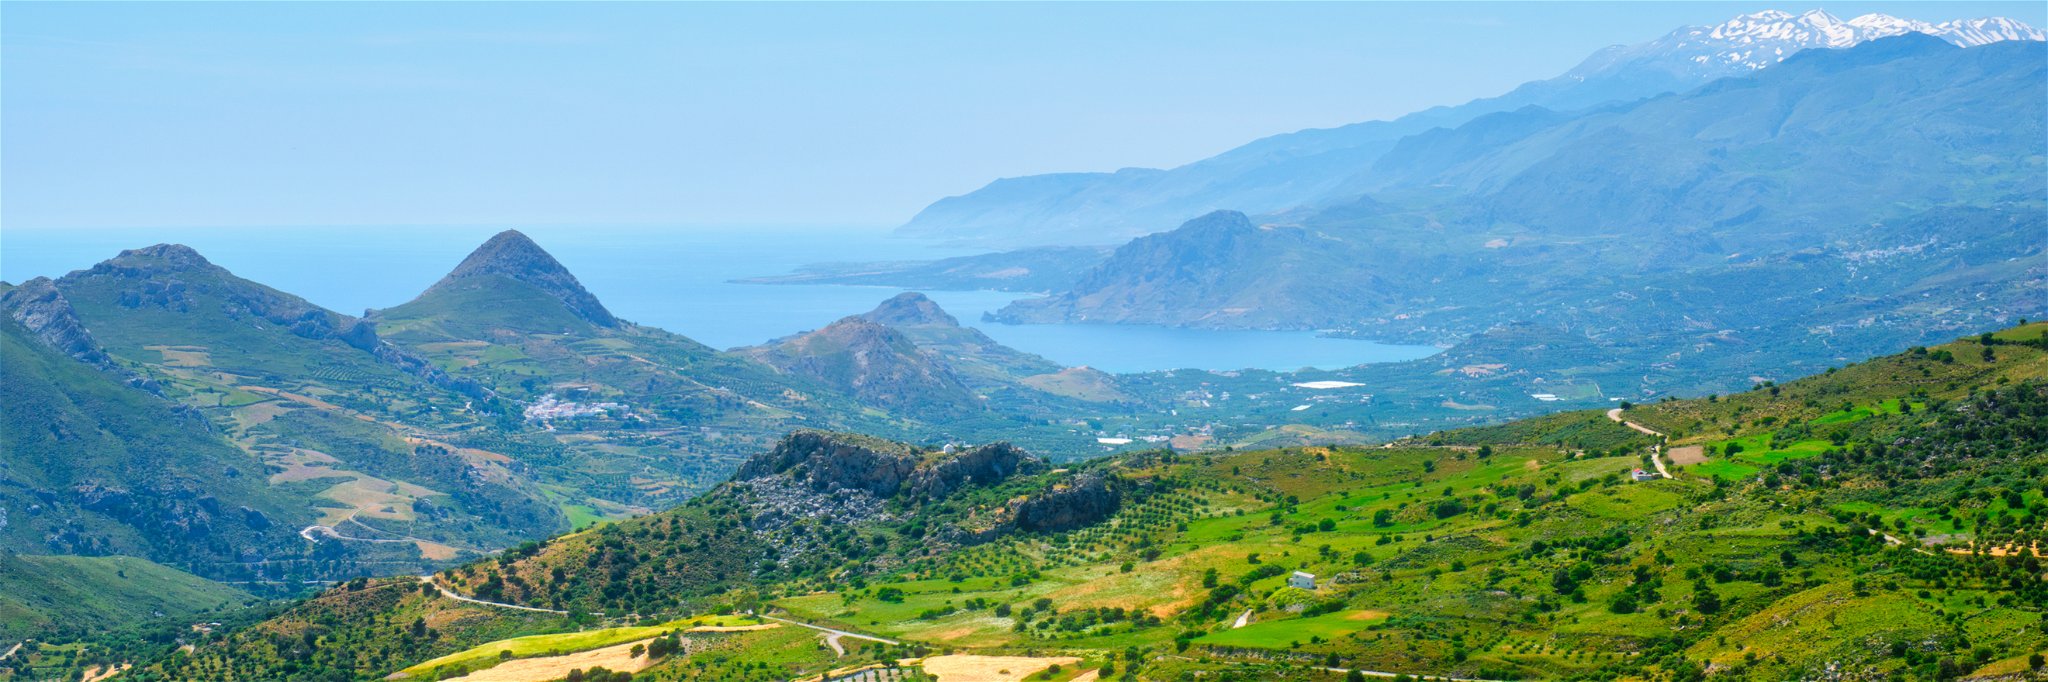 Vineyards and farmland in Crete.